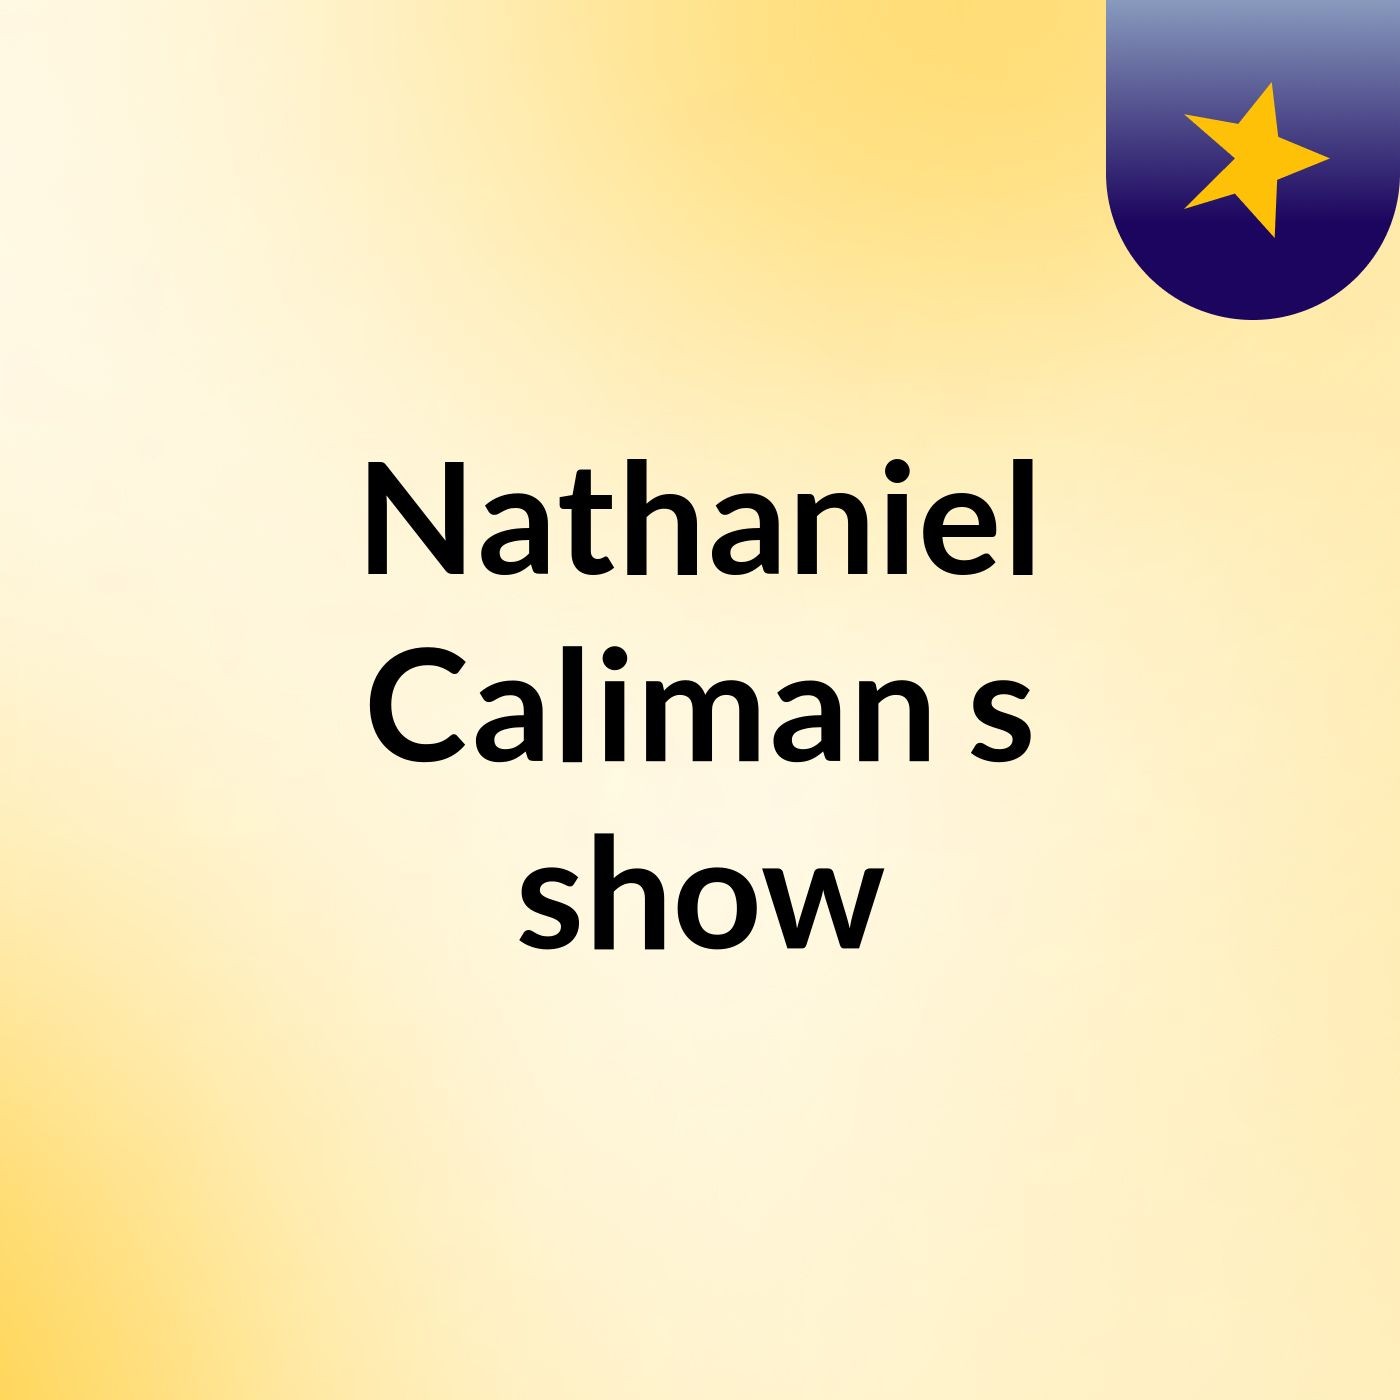 Nathaniel Caliman's show